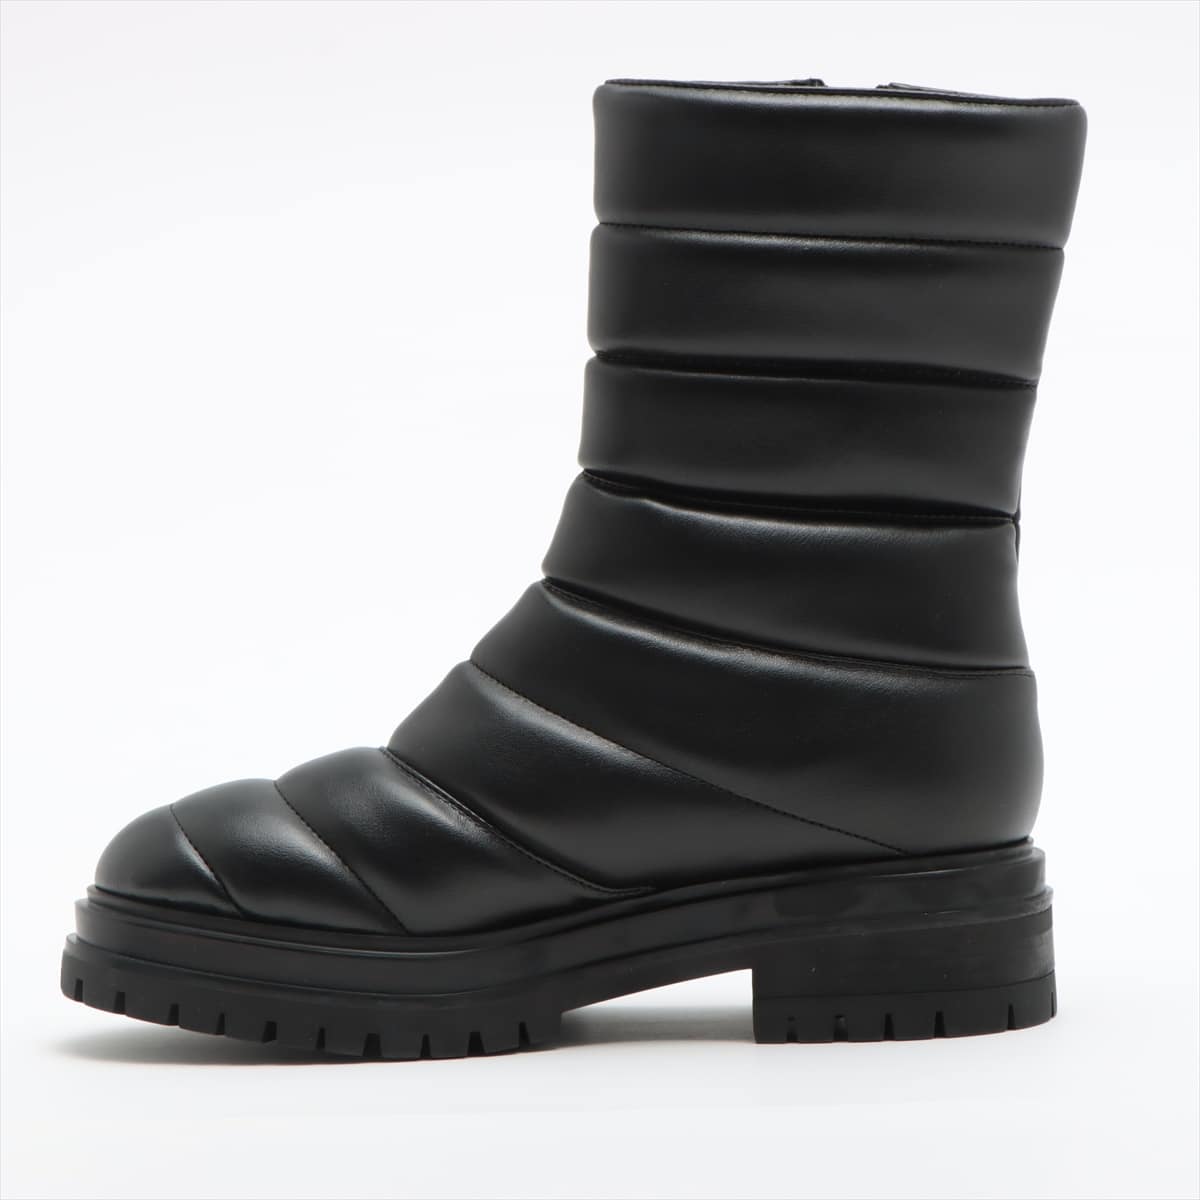 Gianvito Rossi leatherette Boots 36 1/2 Ladies' Black